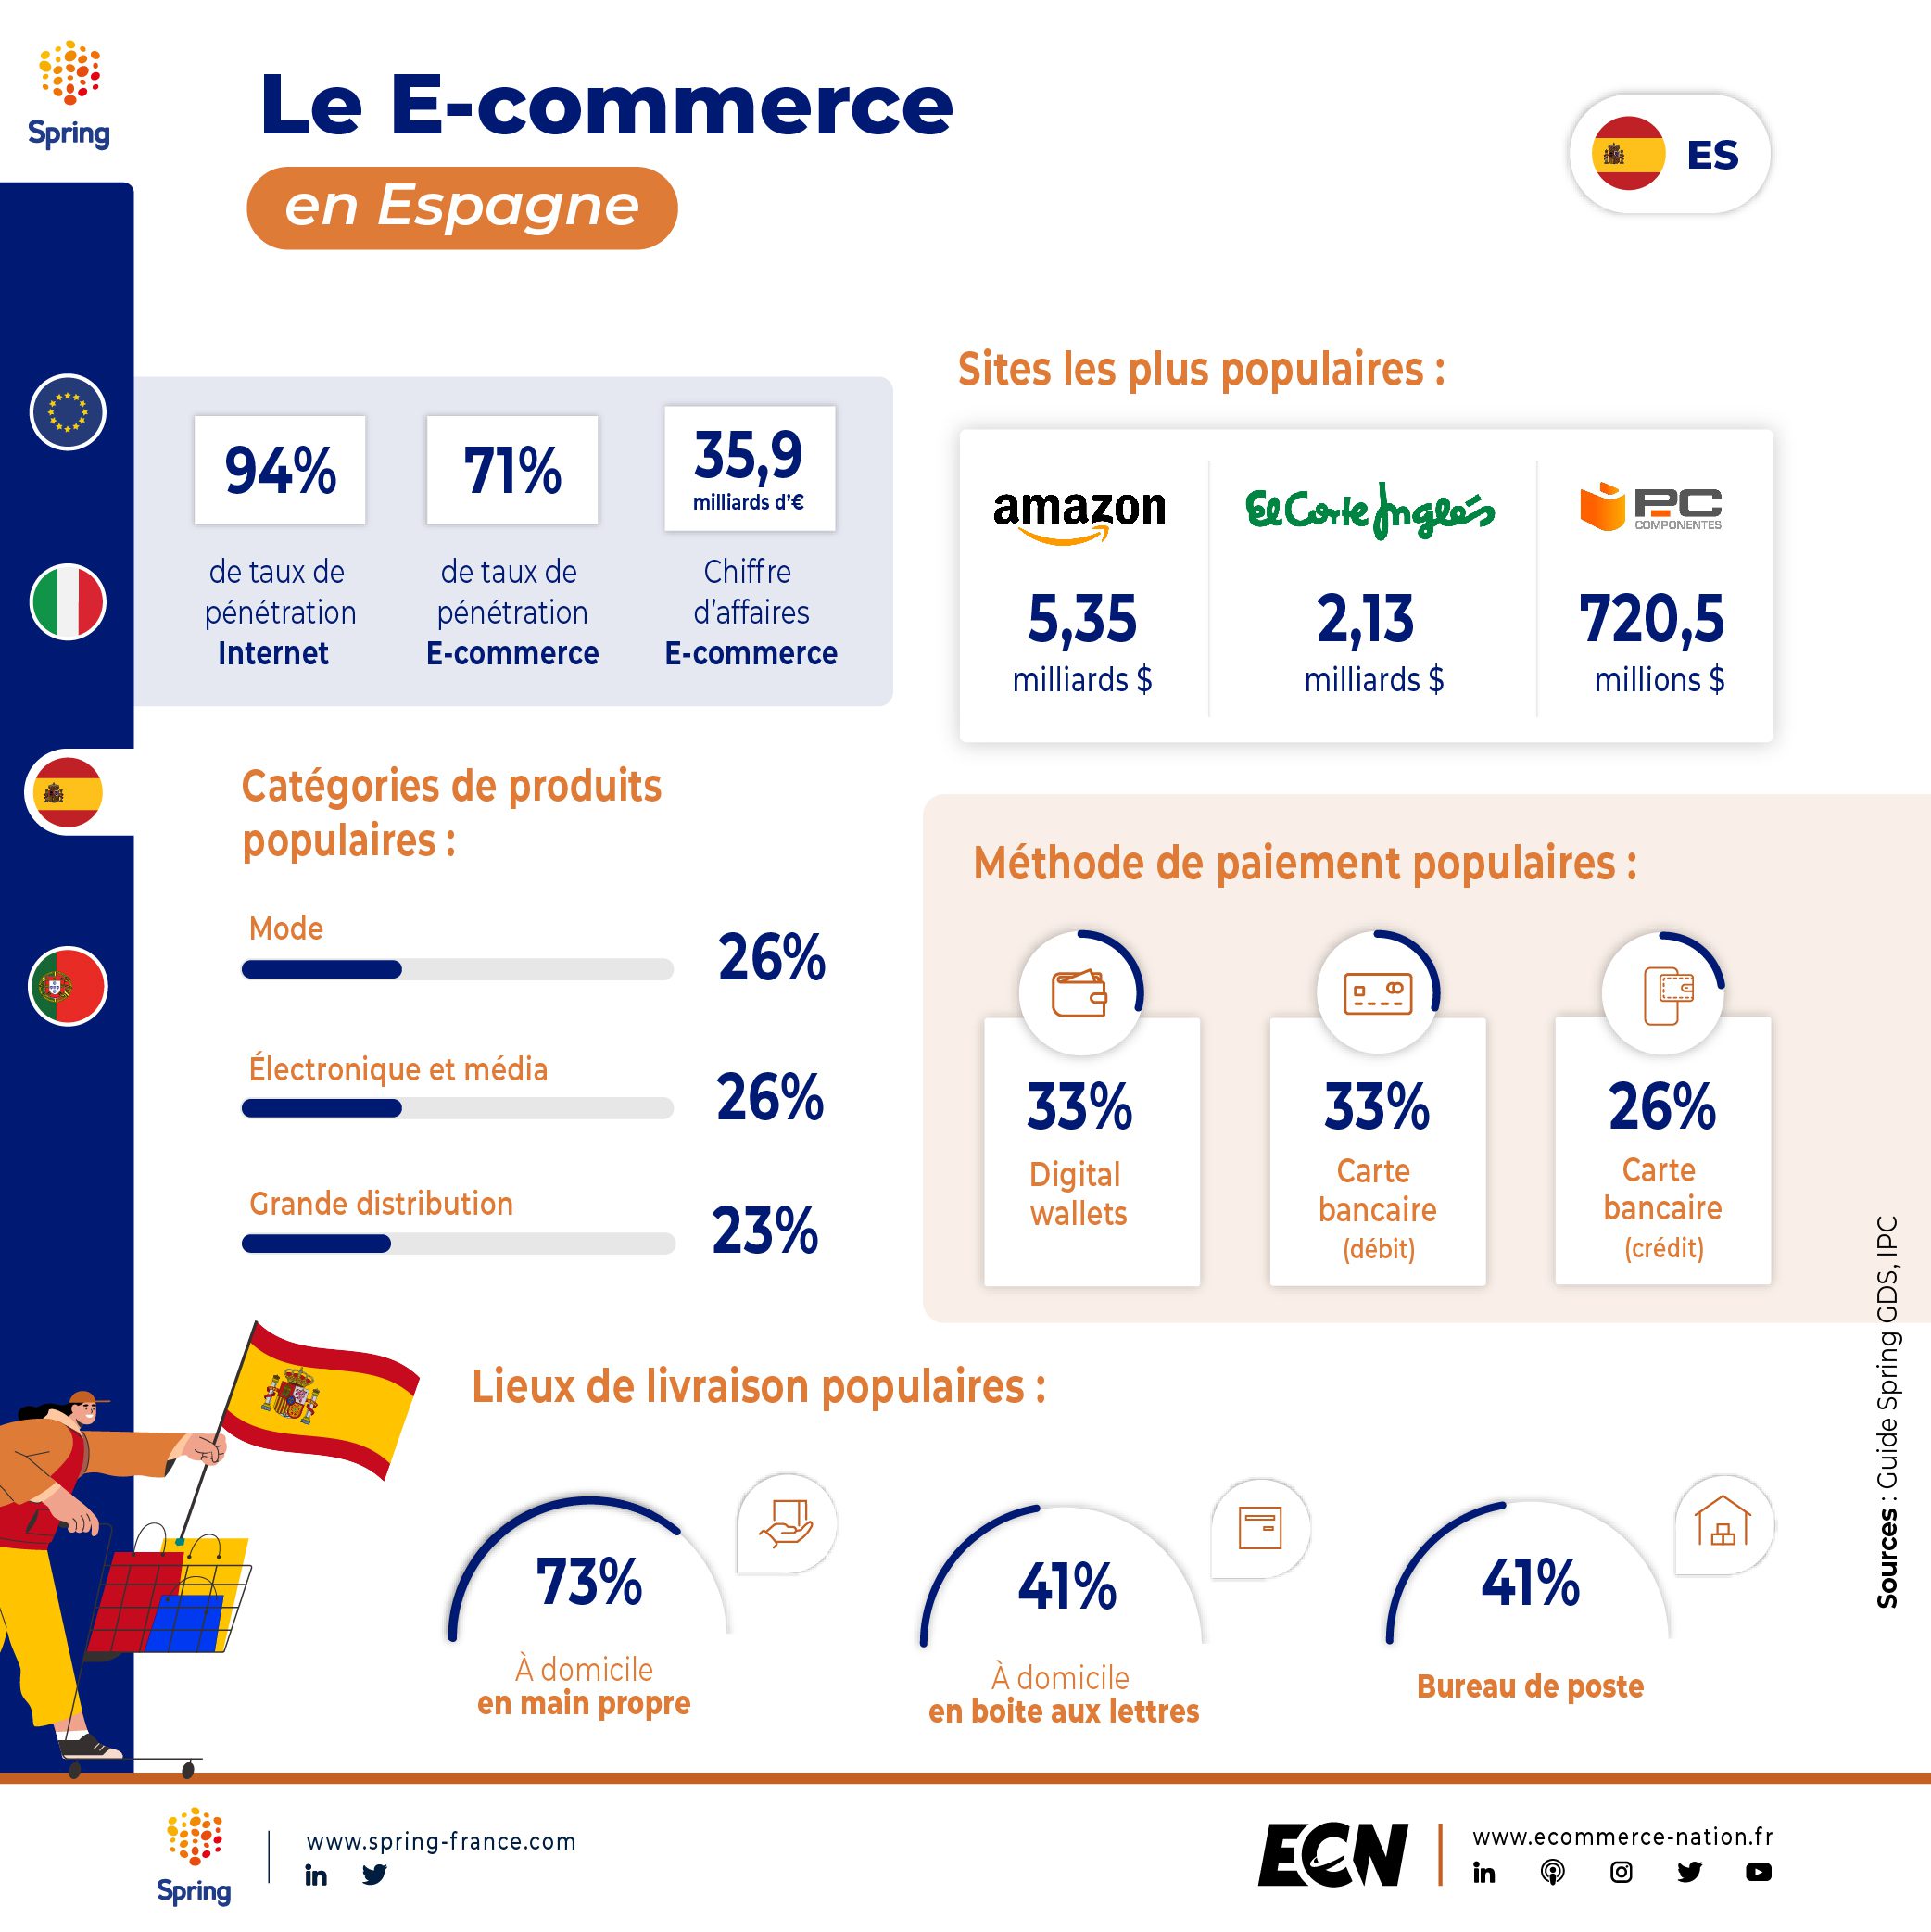 Le E-commerce en Espagne